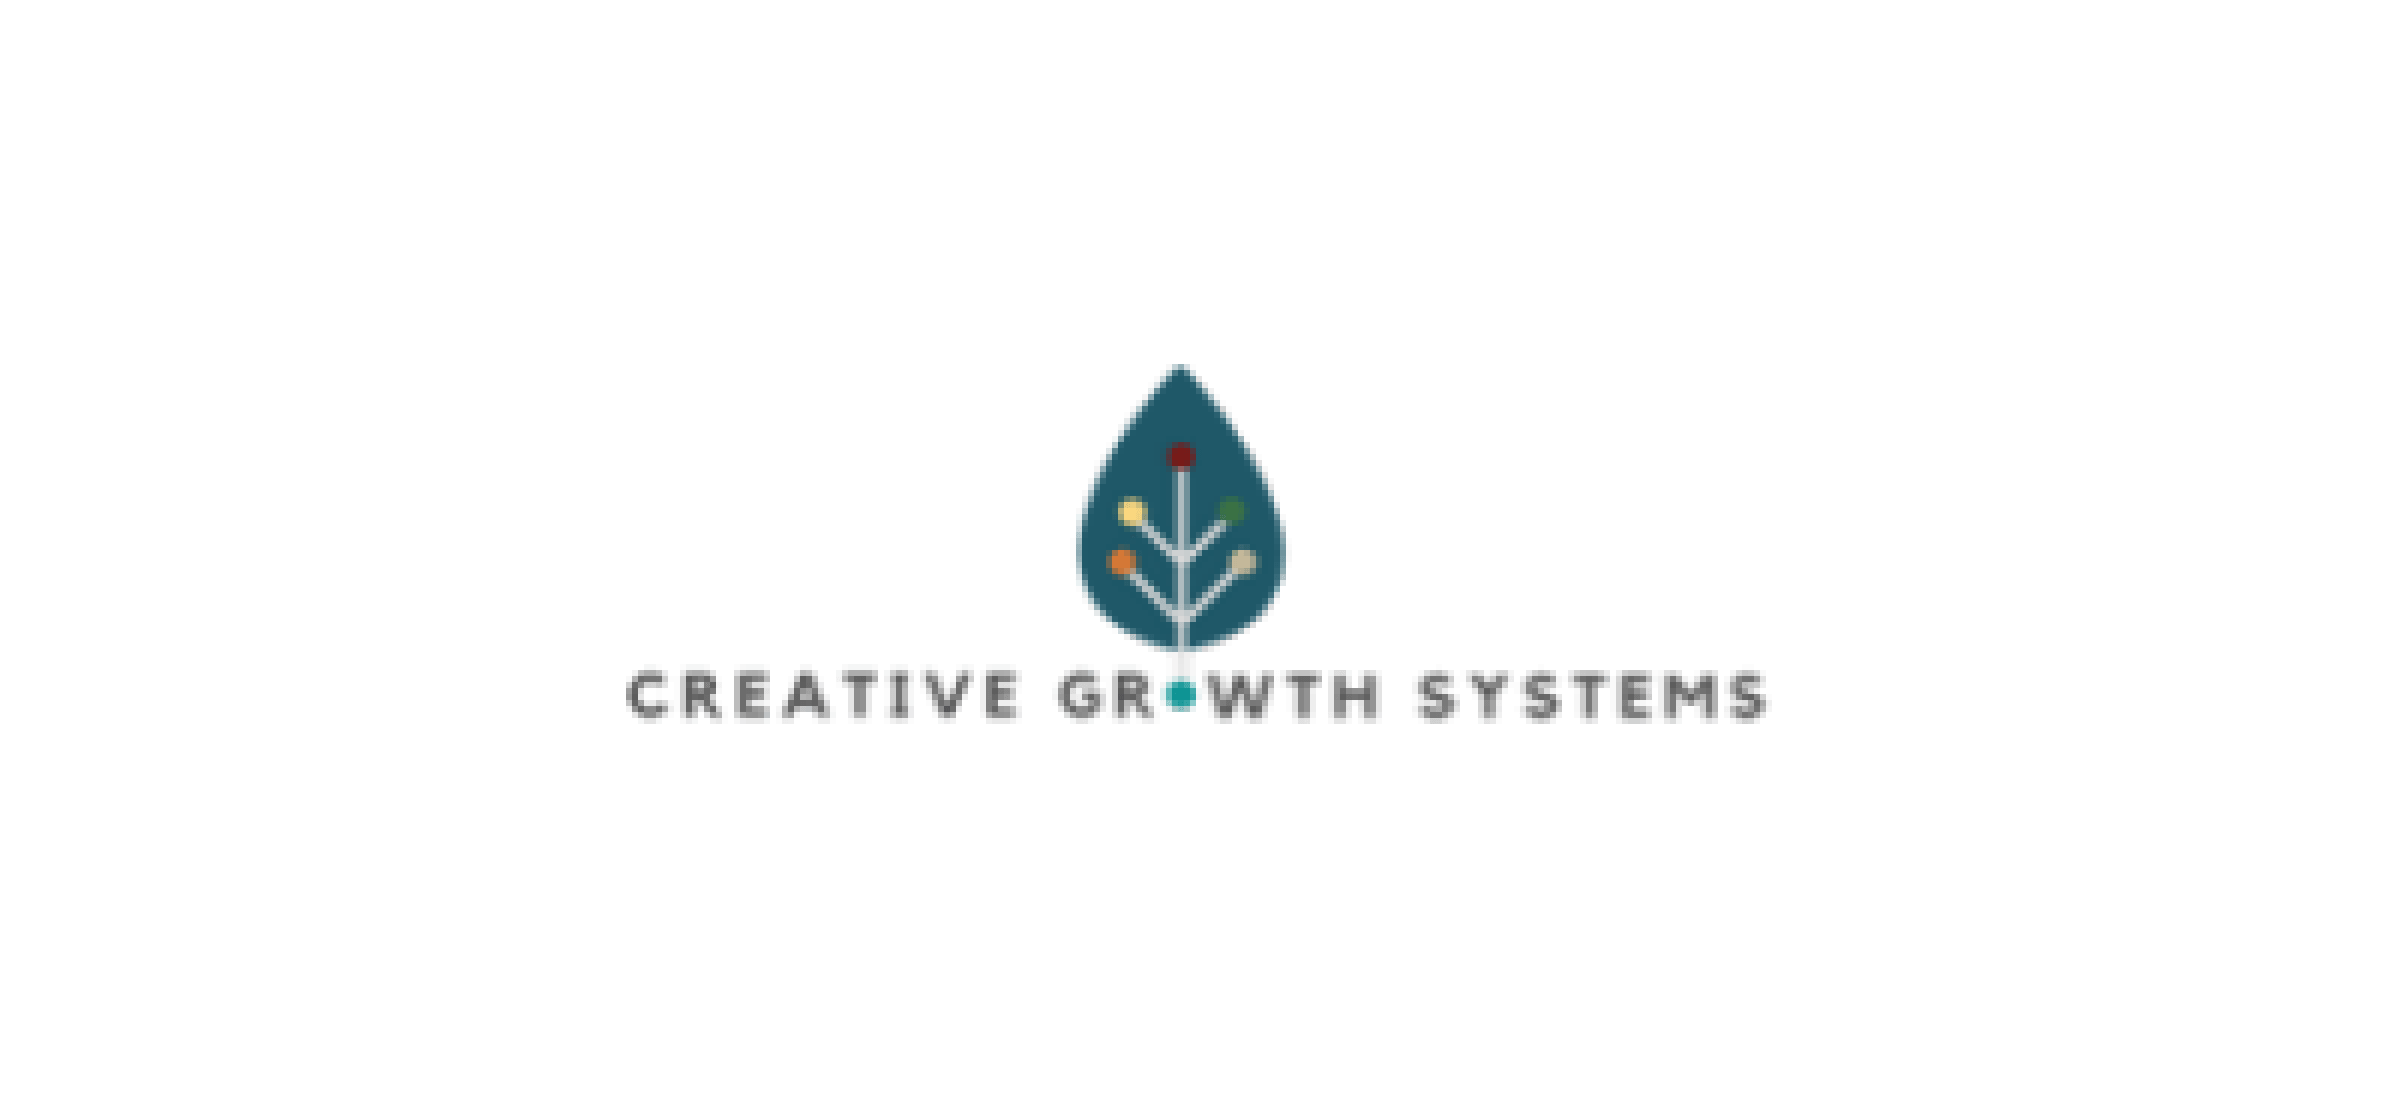 The Creative Growth Systems logo